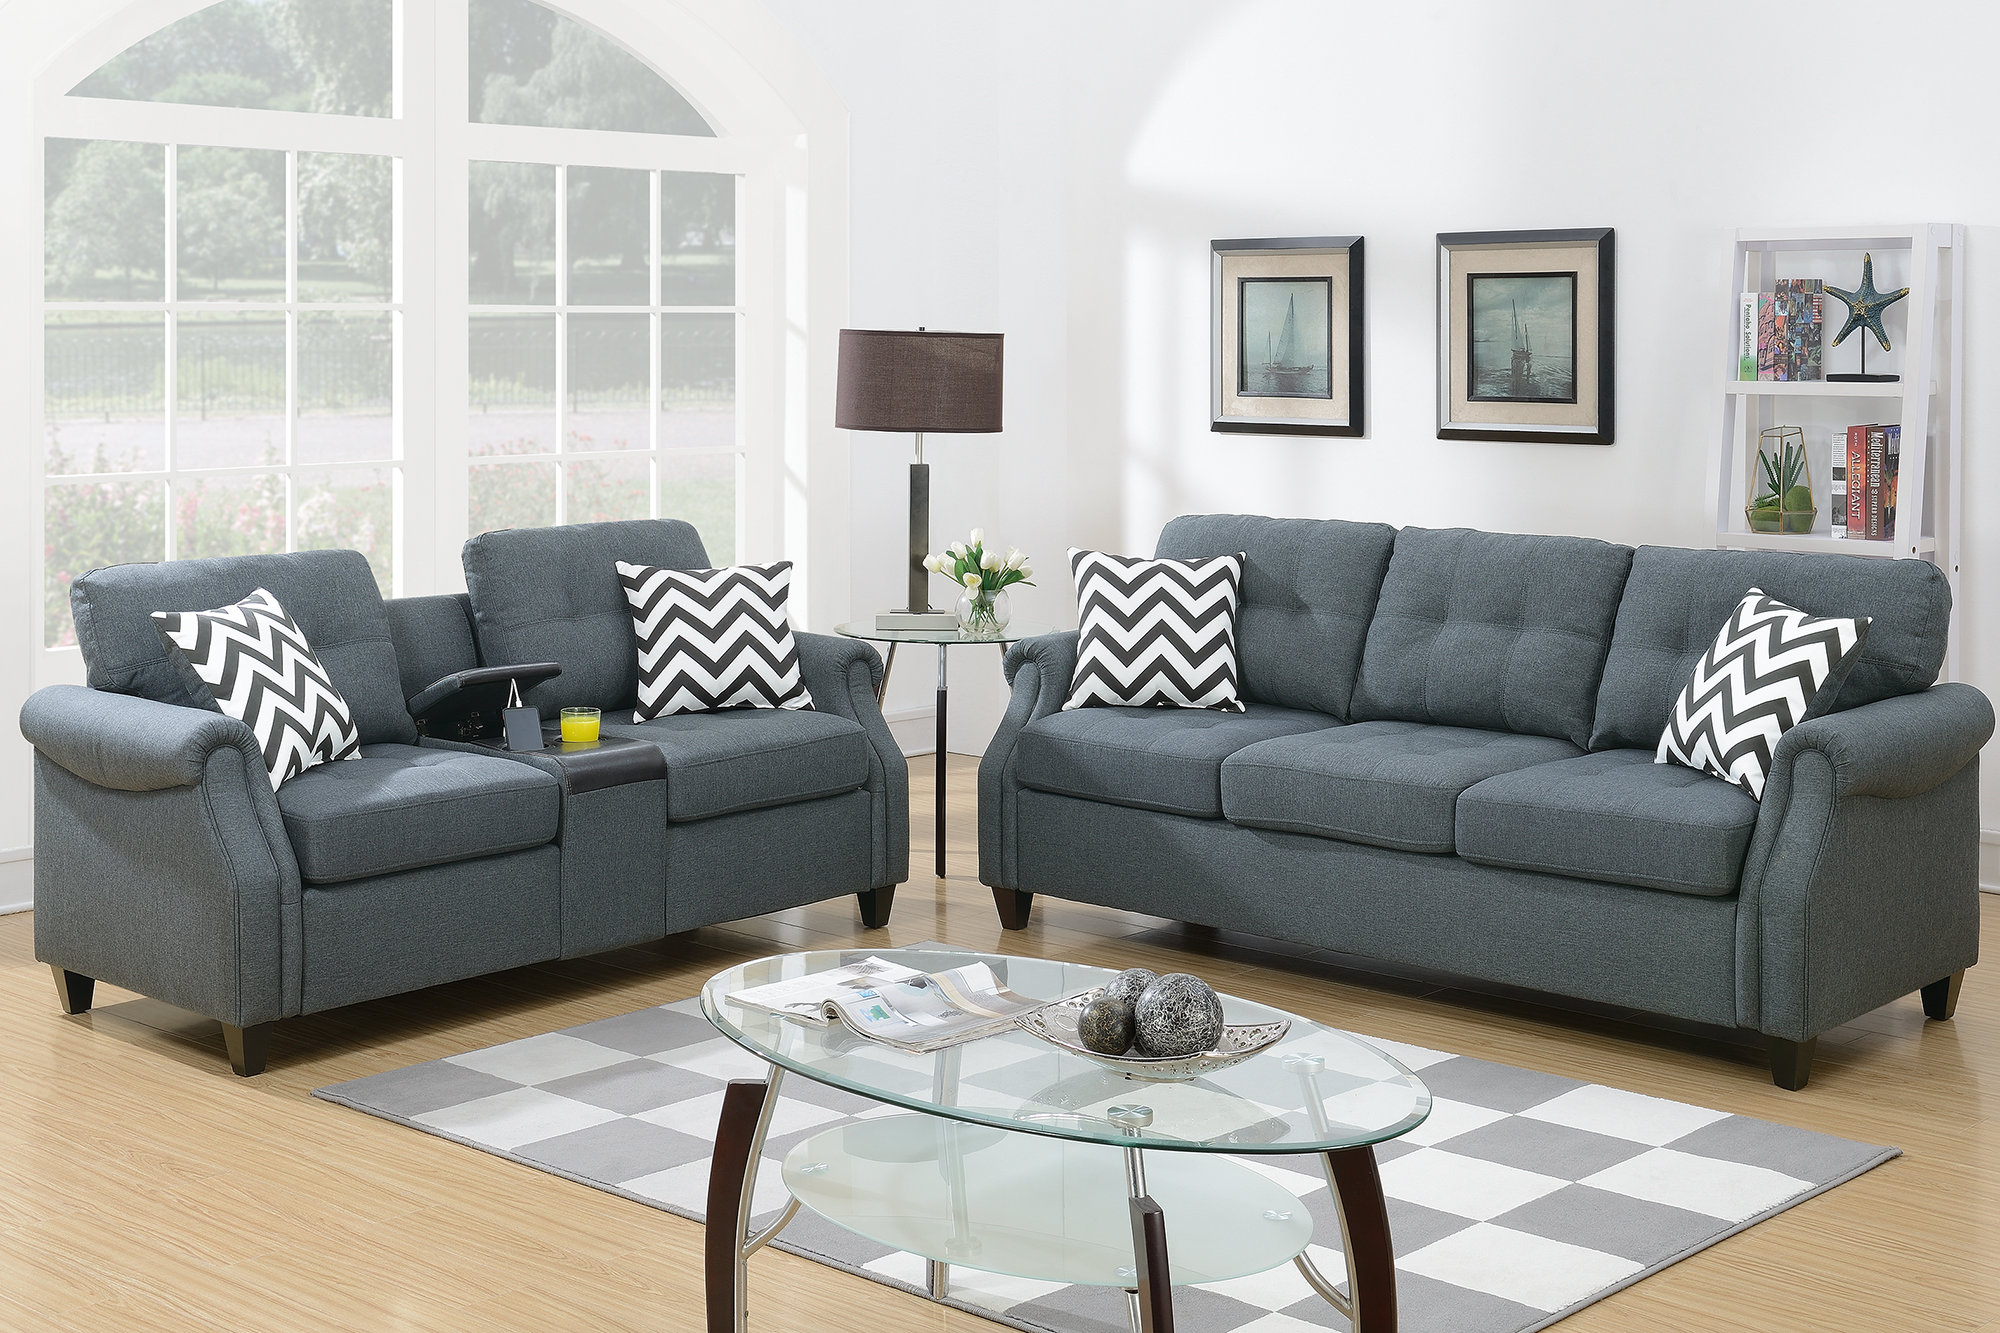 Charlton Home Warrick 2 Piece Living Room Set Reviews Wayfair